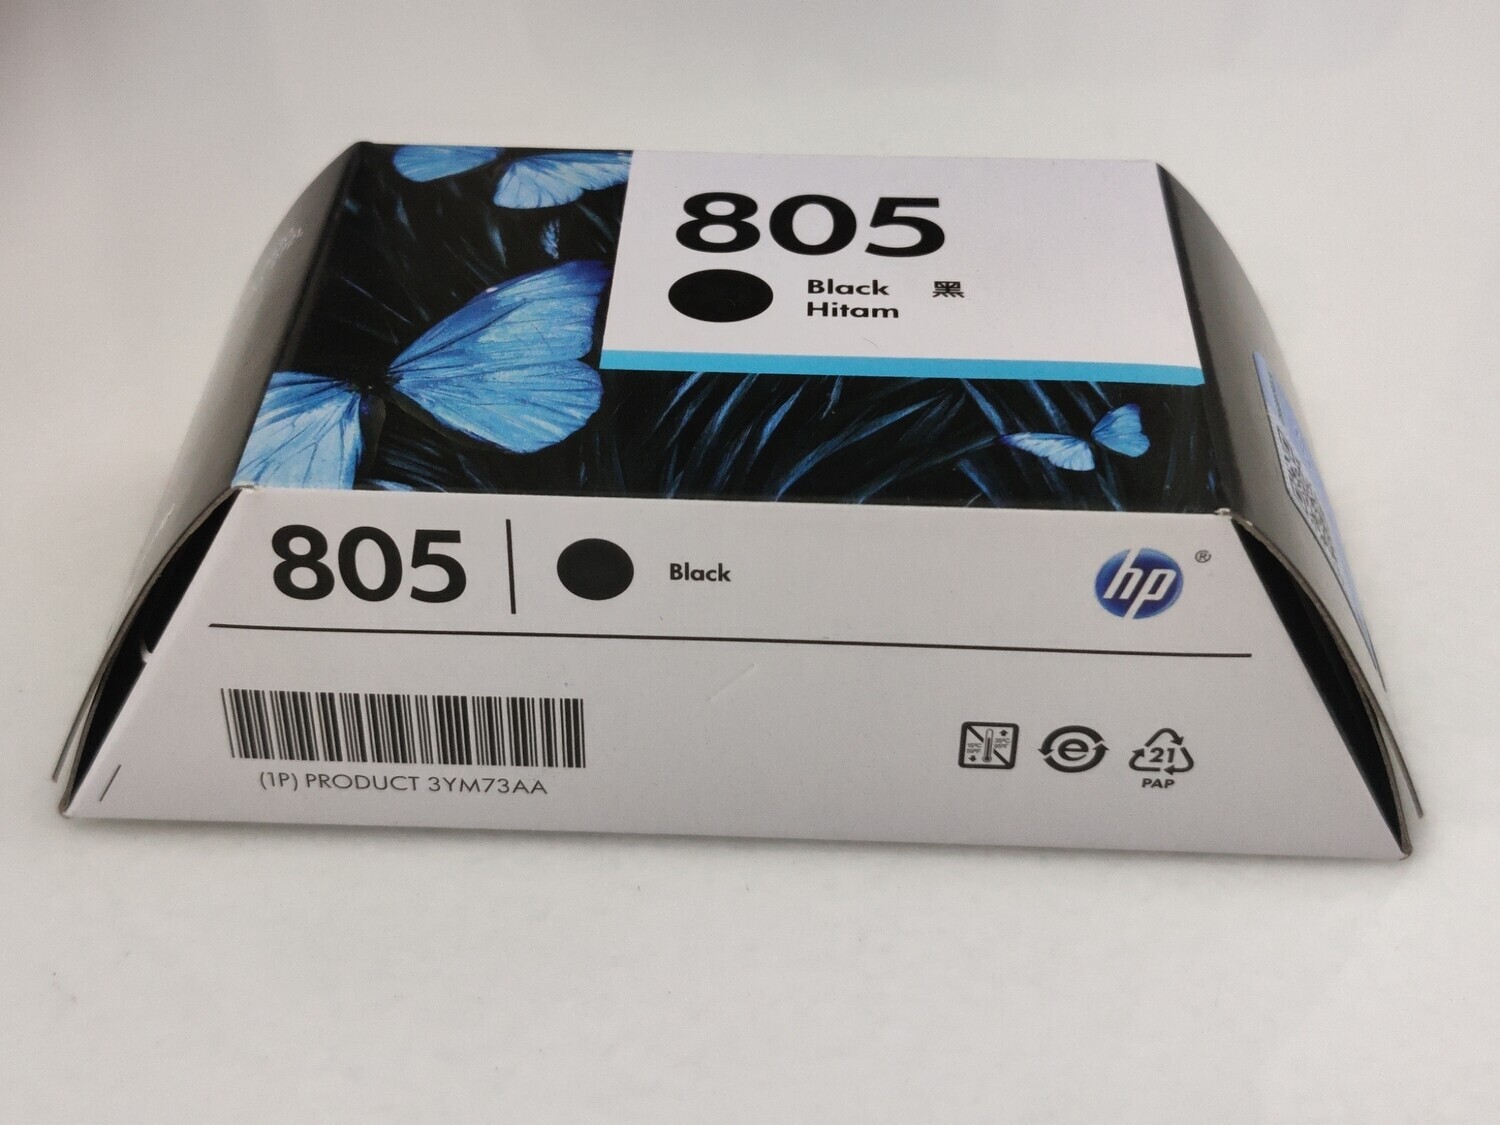 HP 802 Black Original Ink Cartridge